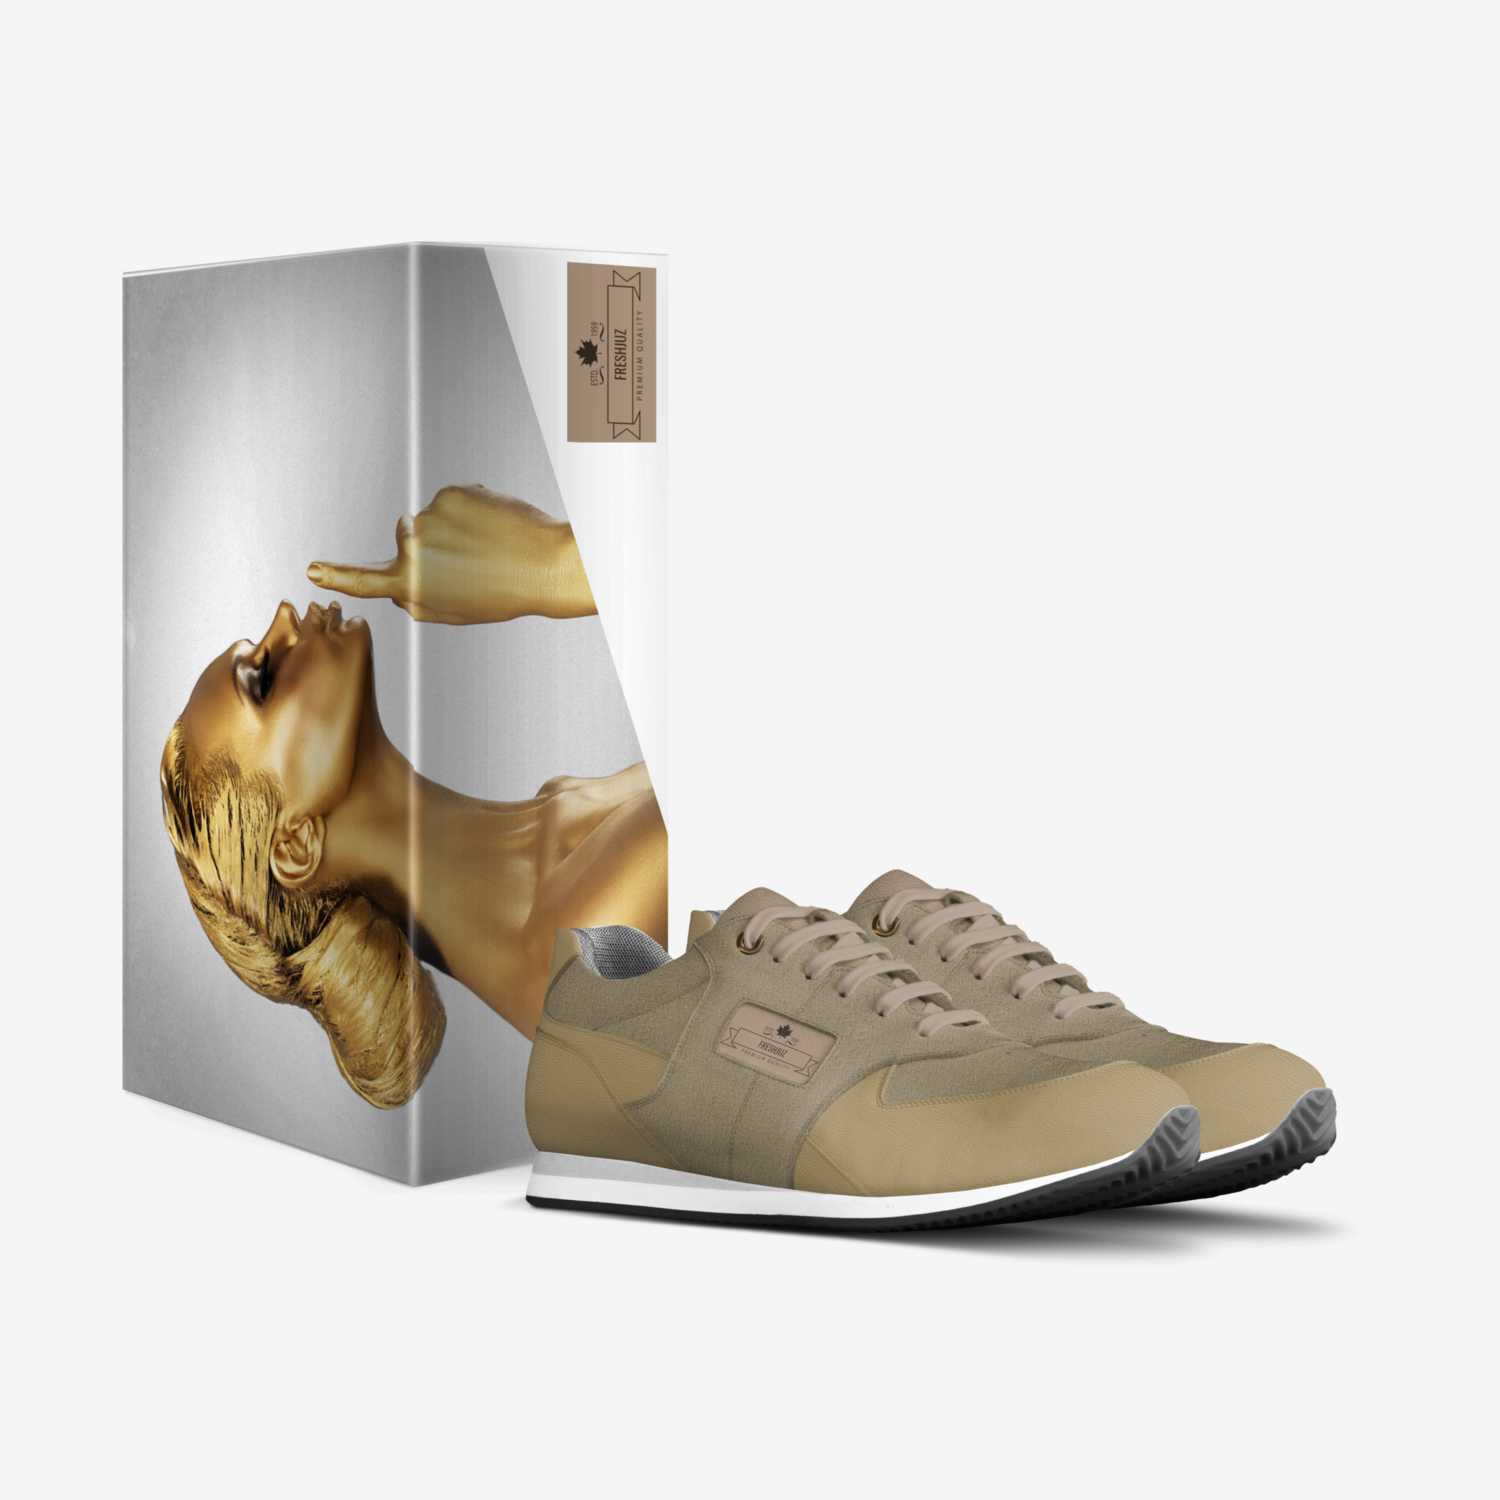 freshjuz custom made in Italy shoes by Stevens Makgala | Box view